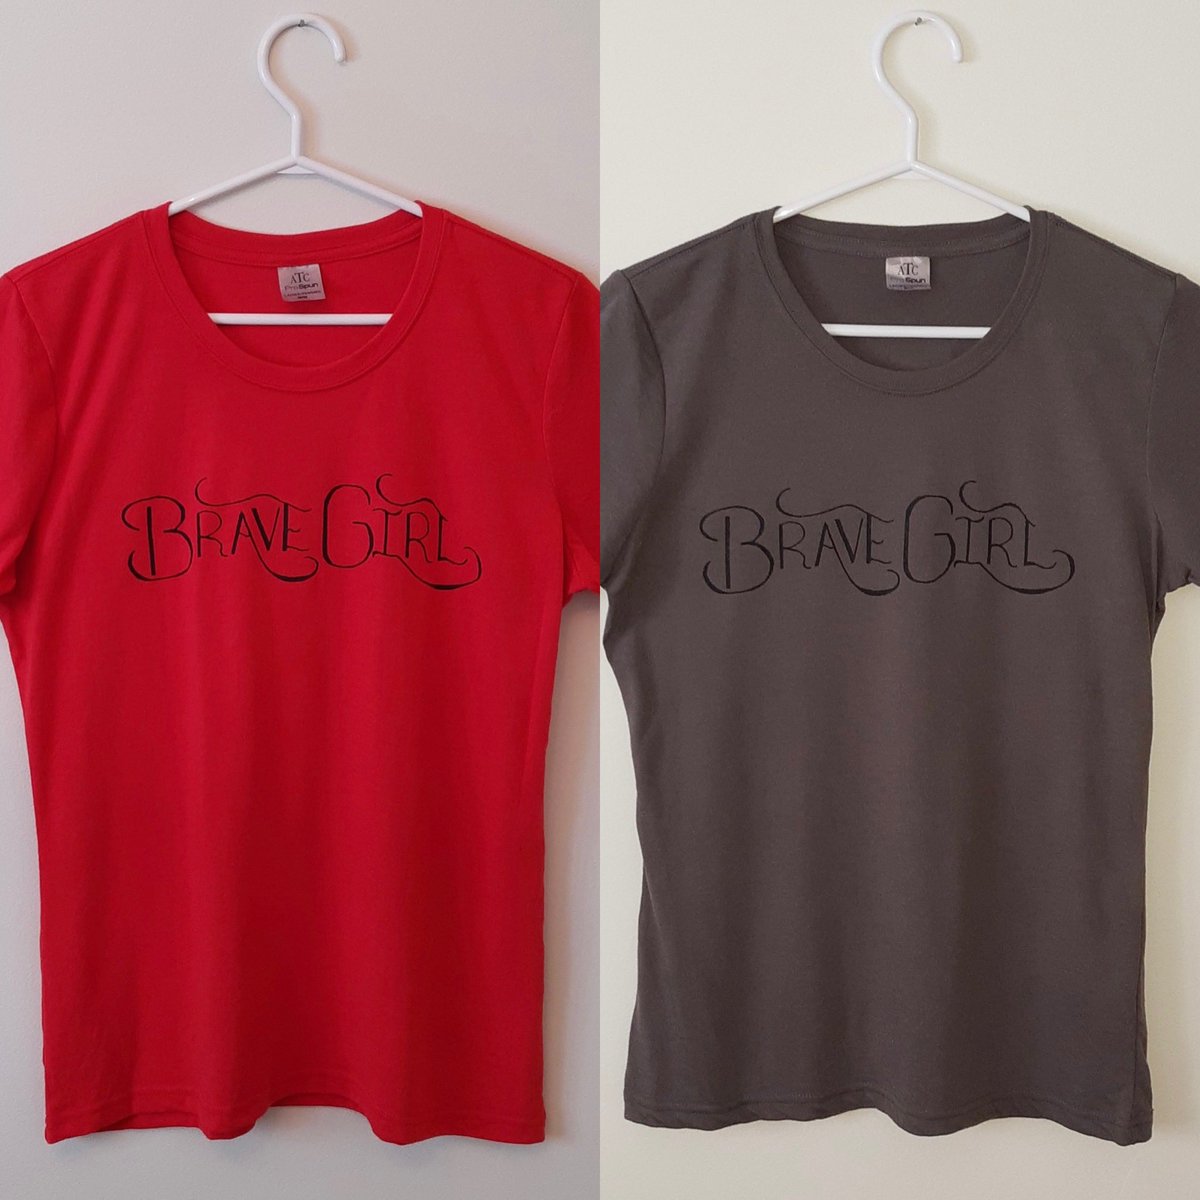 Who has a “Brave Girl” t-shirt? Post your pic in the comments!
Order at rhondalouise.net/online-store. 

#tshirt #womenstshirt #girlstshirt #merch #merchandise #calgary #yyc #calgarymusician #calgaryspeaker #christianmusician #christianspeaker